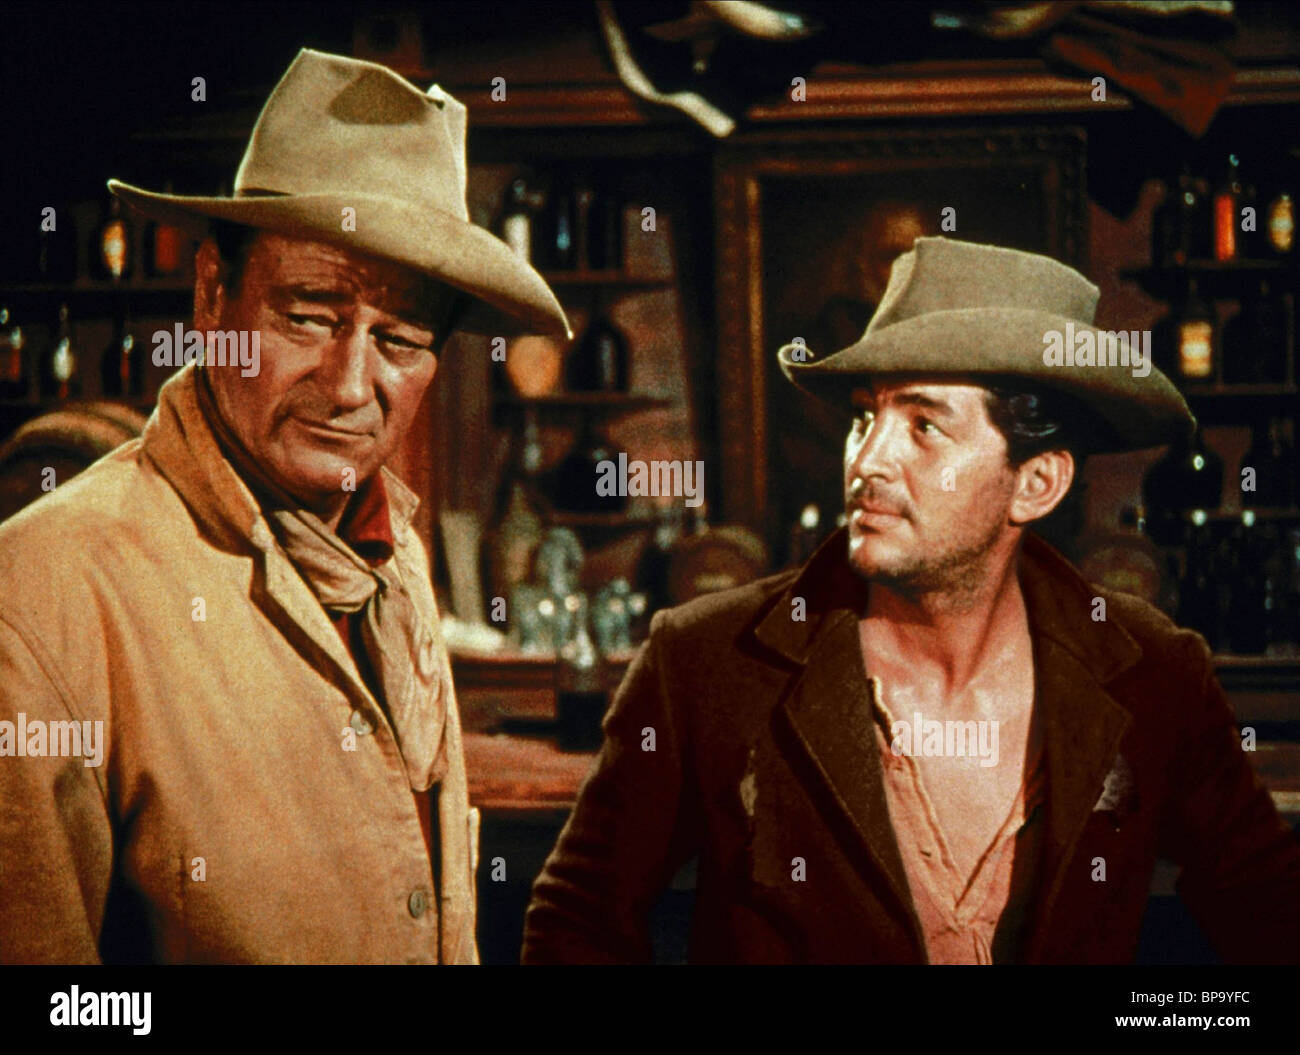 JOHN WAYNE, Dean Martin, Rio Bravo, 1959 Stockfotografie - Alamy